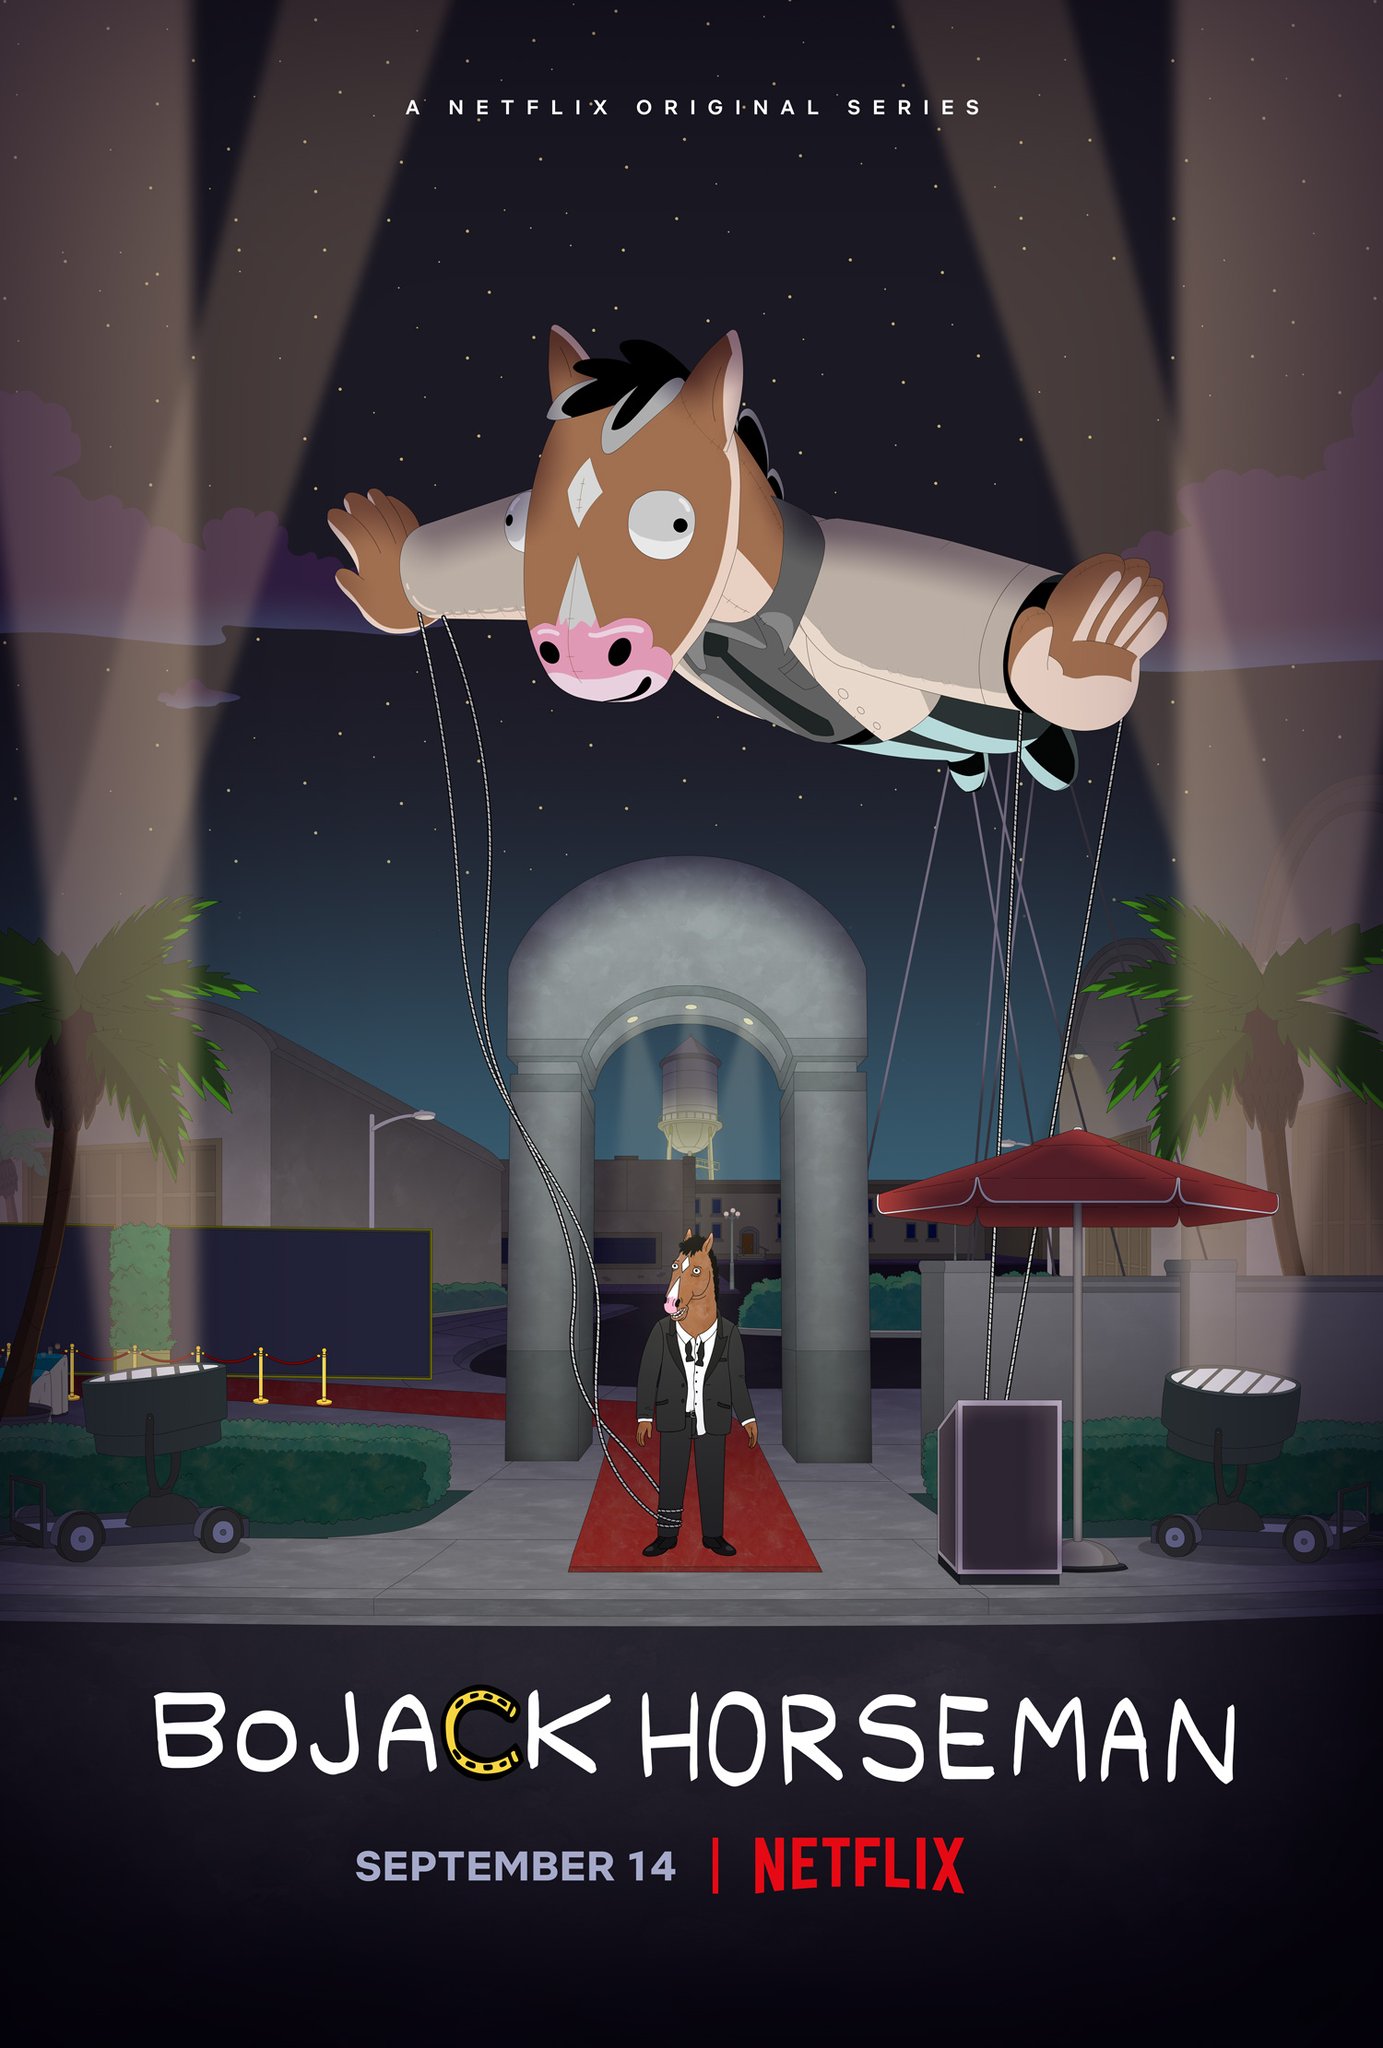 Poster for season five of Netflix show, "BoJack Horseman"